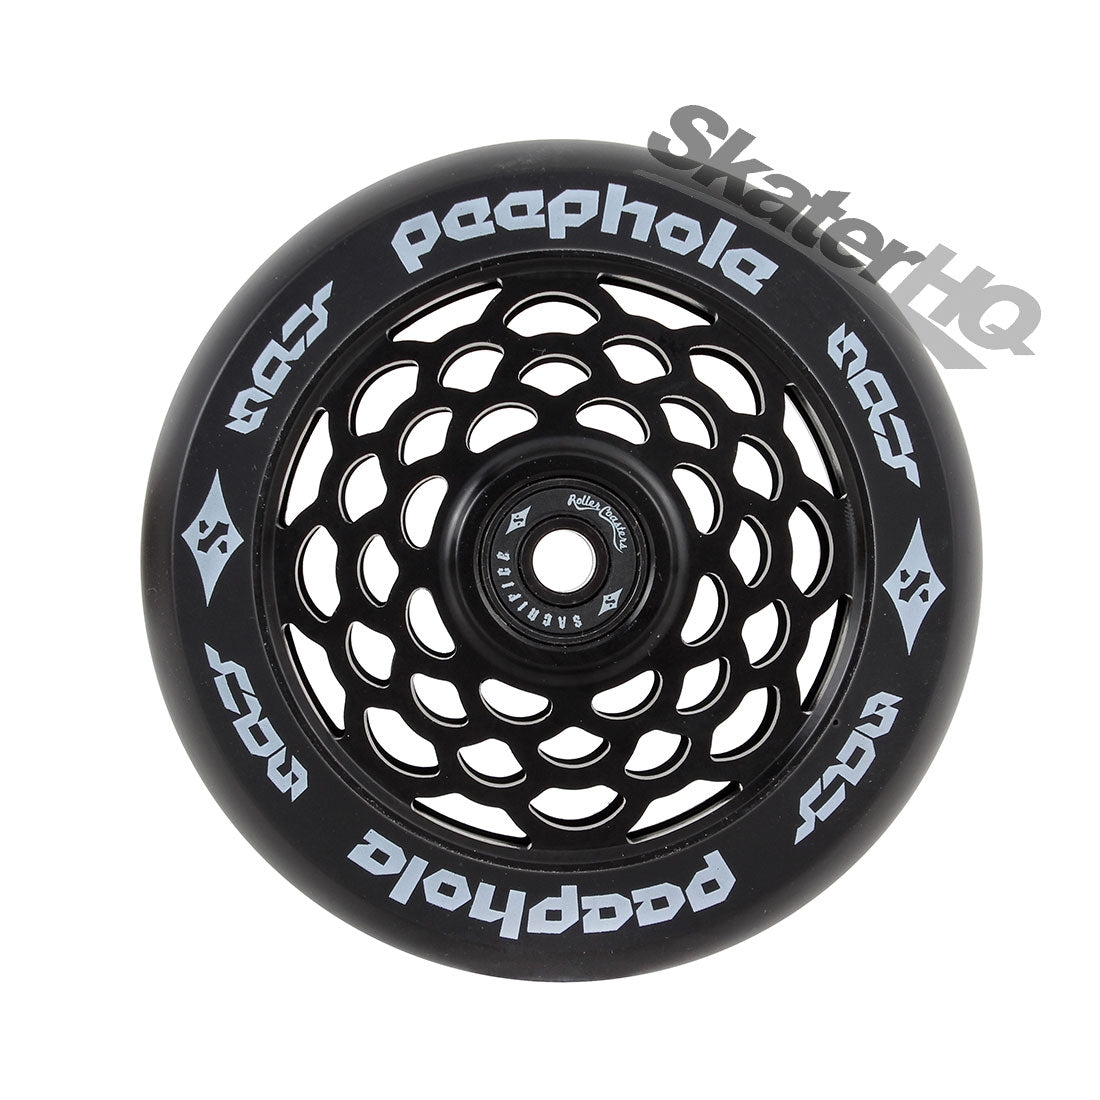 Sacrifice Spy PeepHole 110mm Wheel - All Black Scooter Wheels